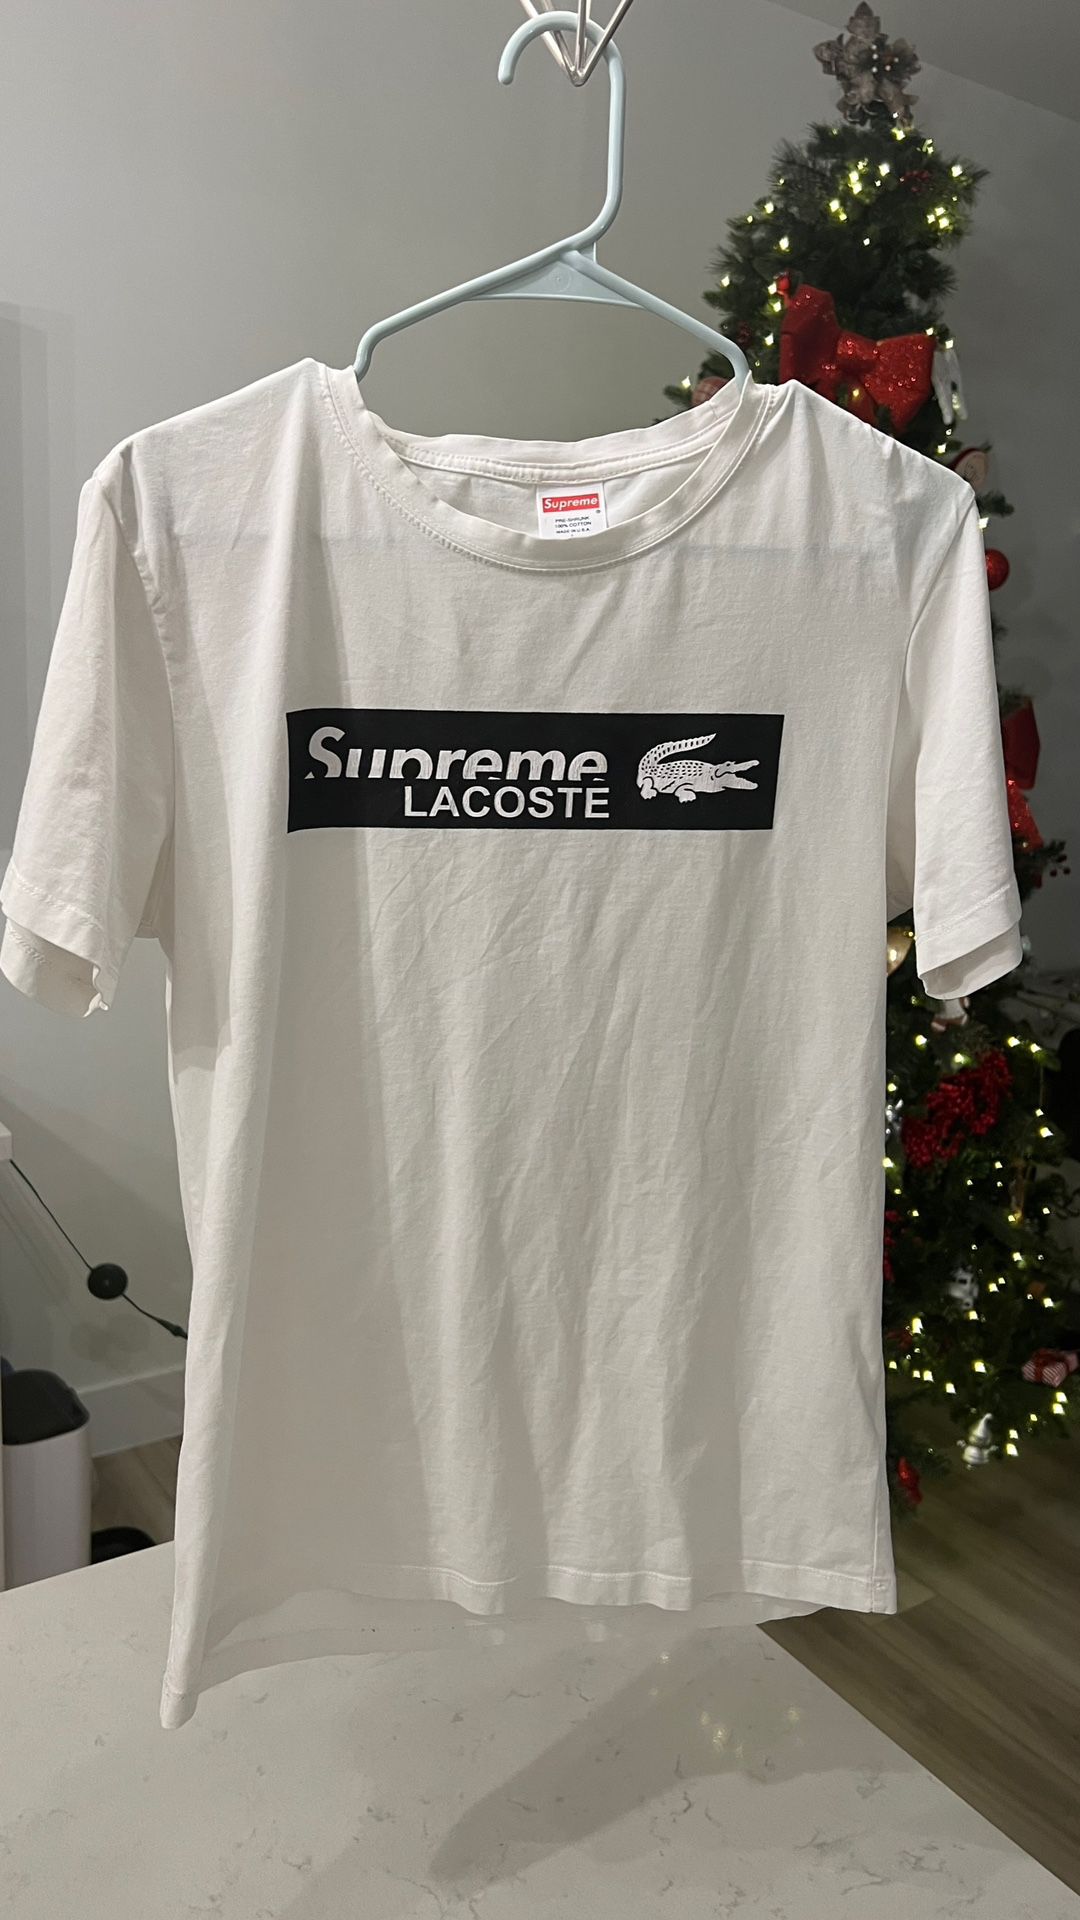 Supreme X Lacoste T-Shirt